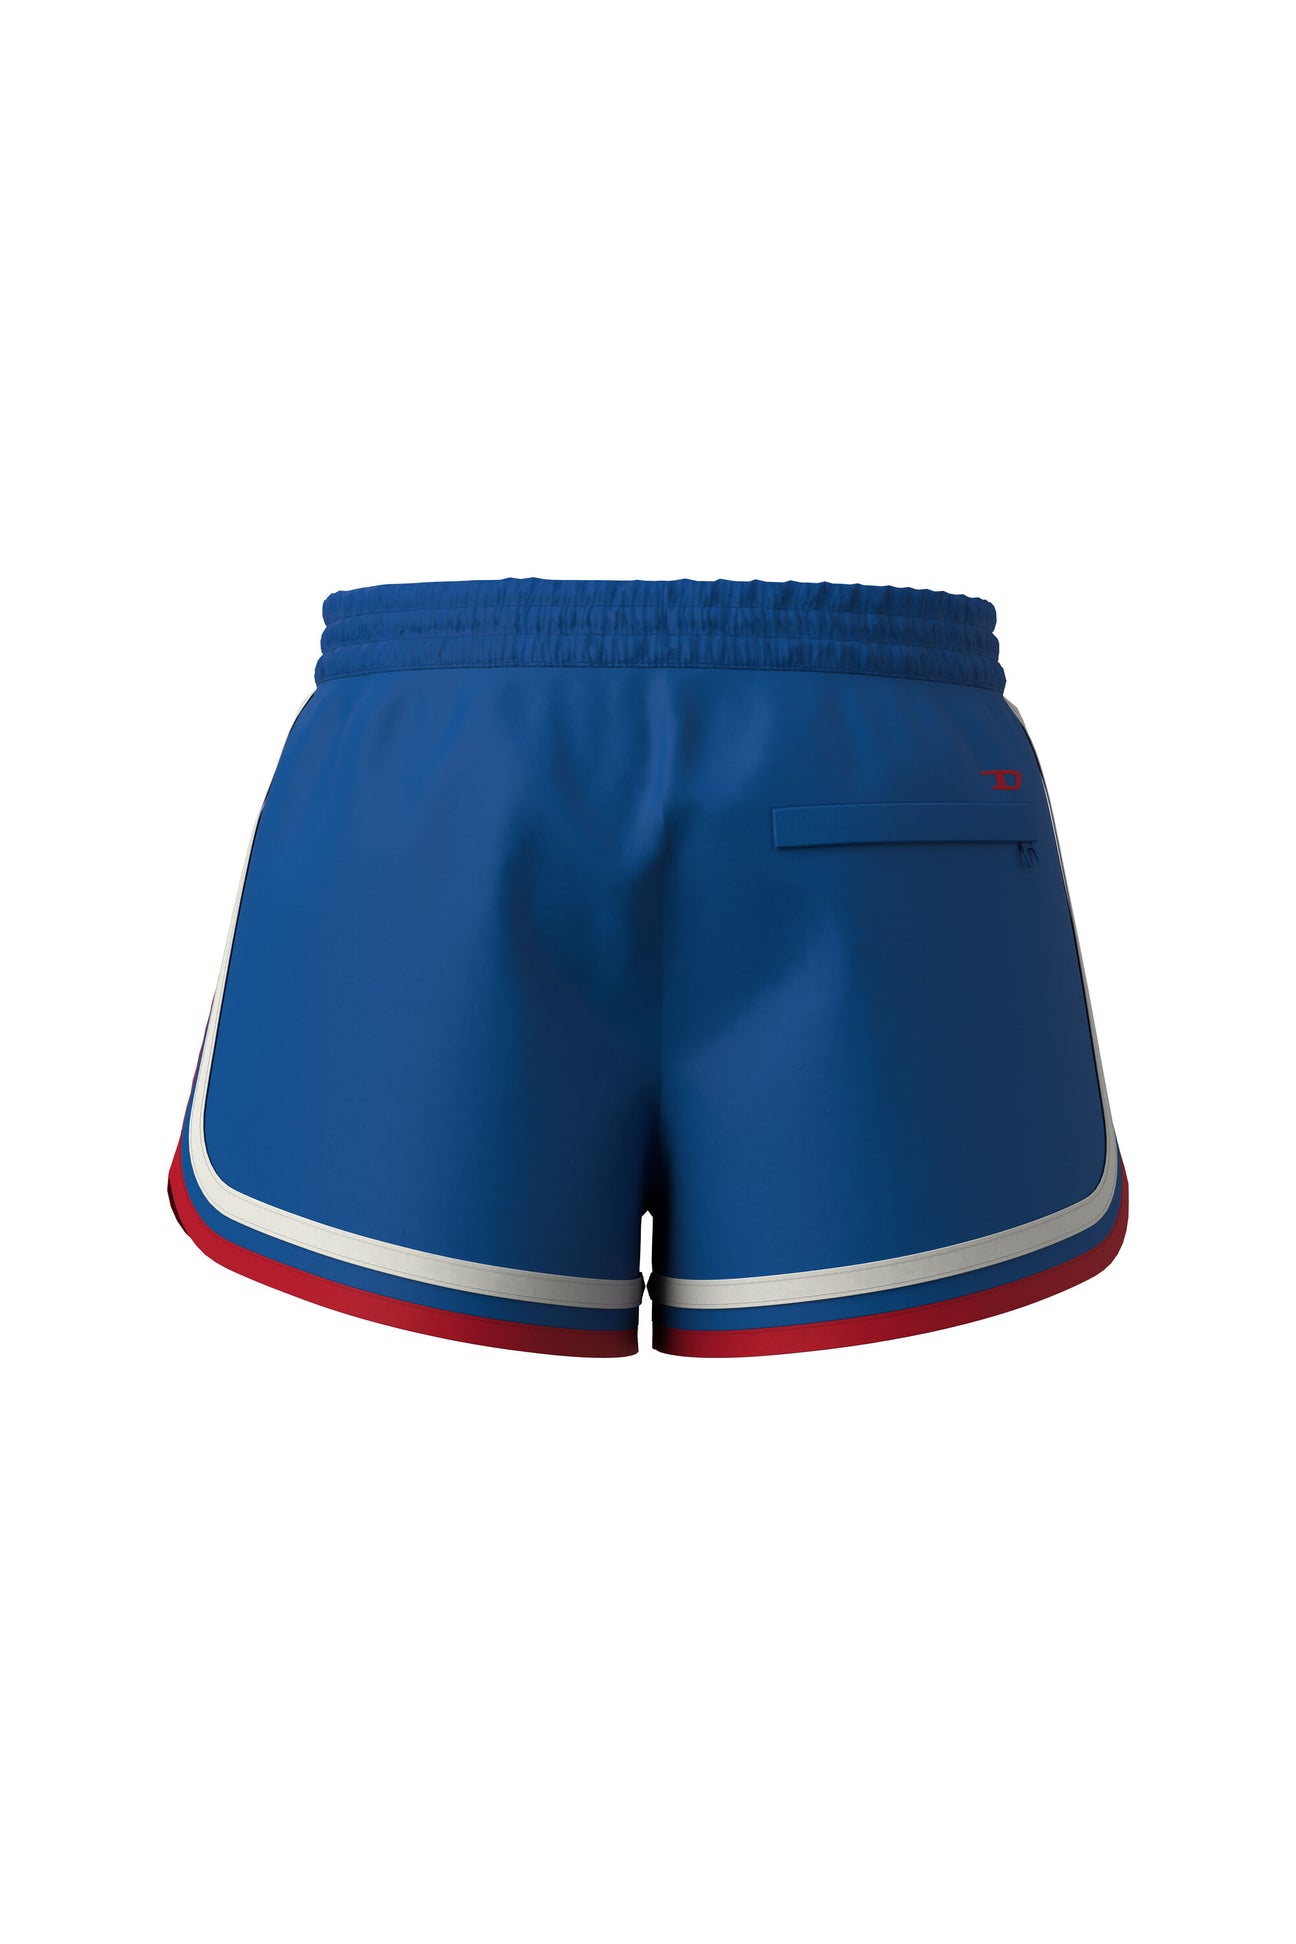 Blue boxer shorts with logo Blue boxer shorts with logo